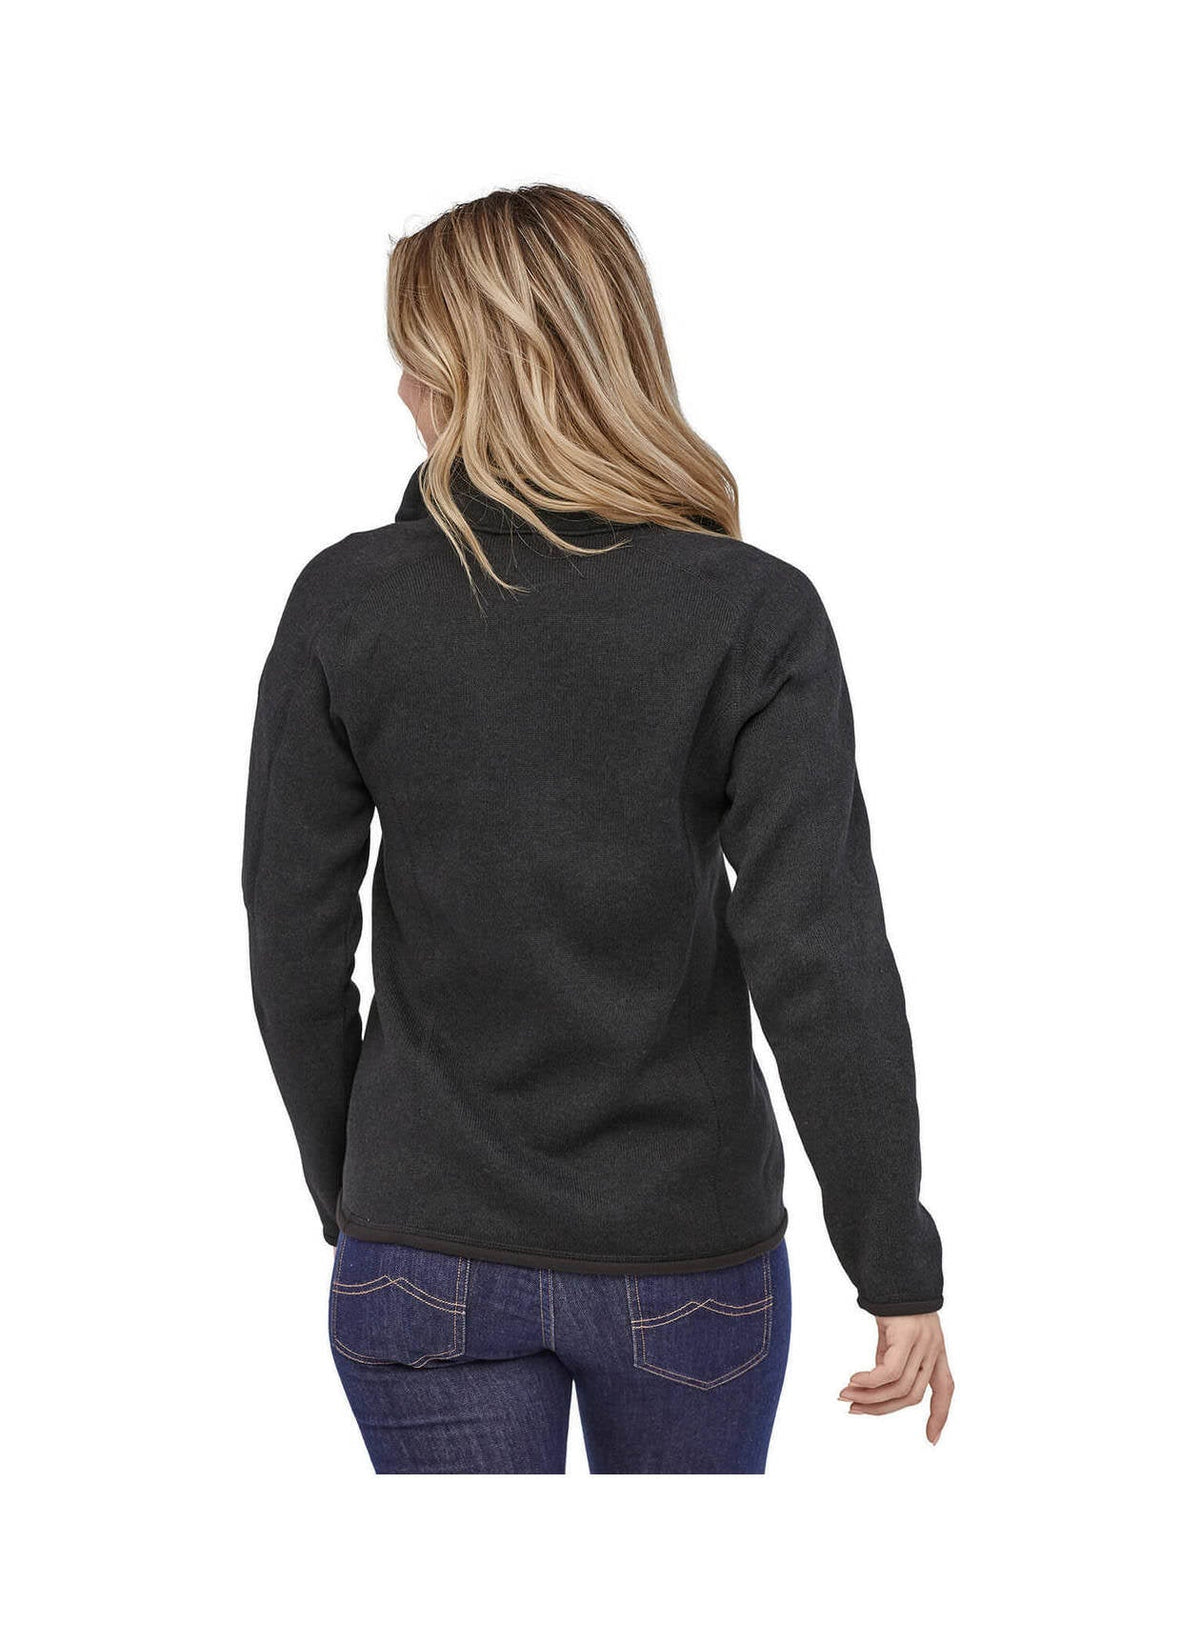 Patagonia Women's Better Sweater Quarter-Zip